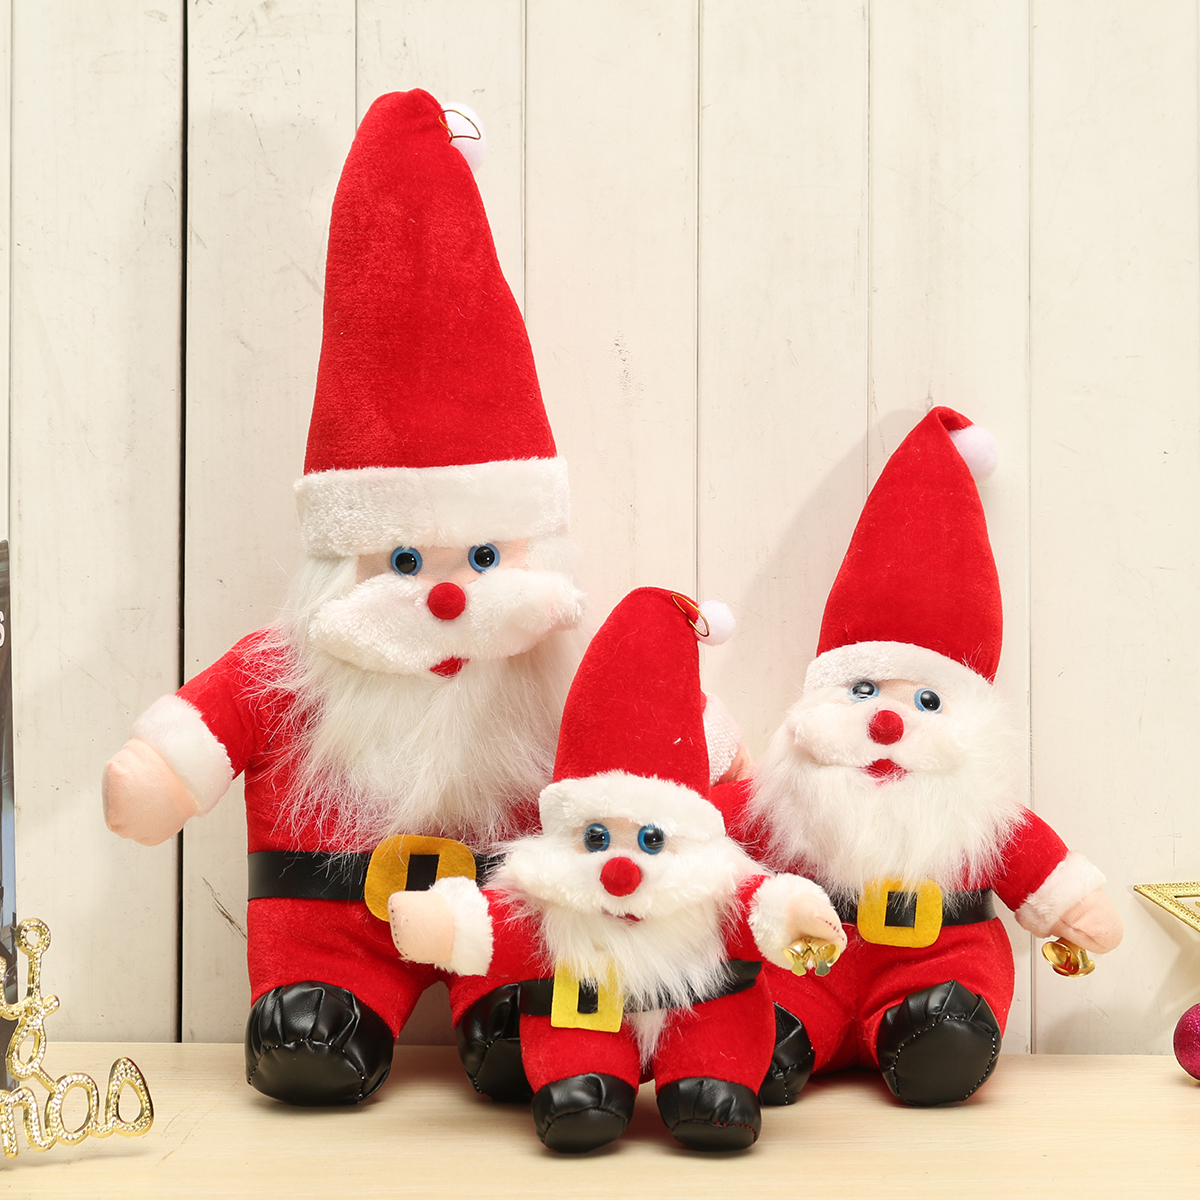 Christmas-Santa-Claus-Doll-Gift-Present-Xmas-Tree-Hanging-Ornament-Home-Decor-1087849-1